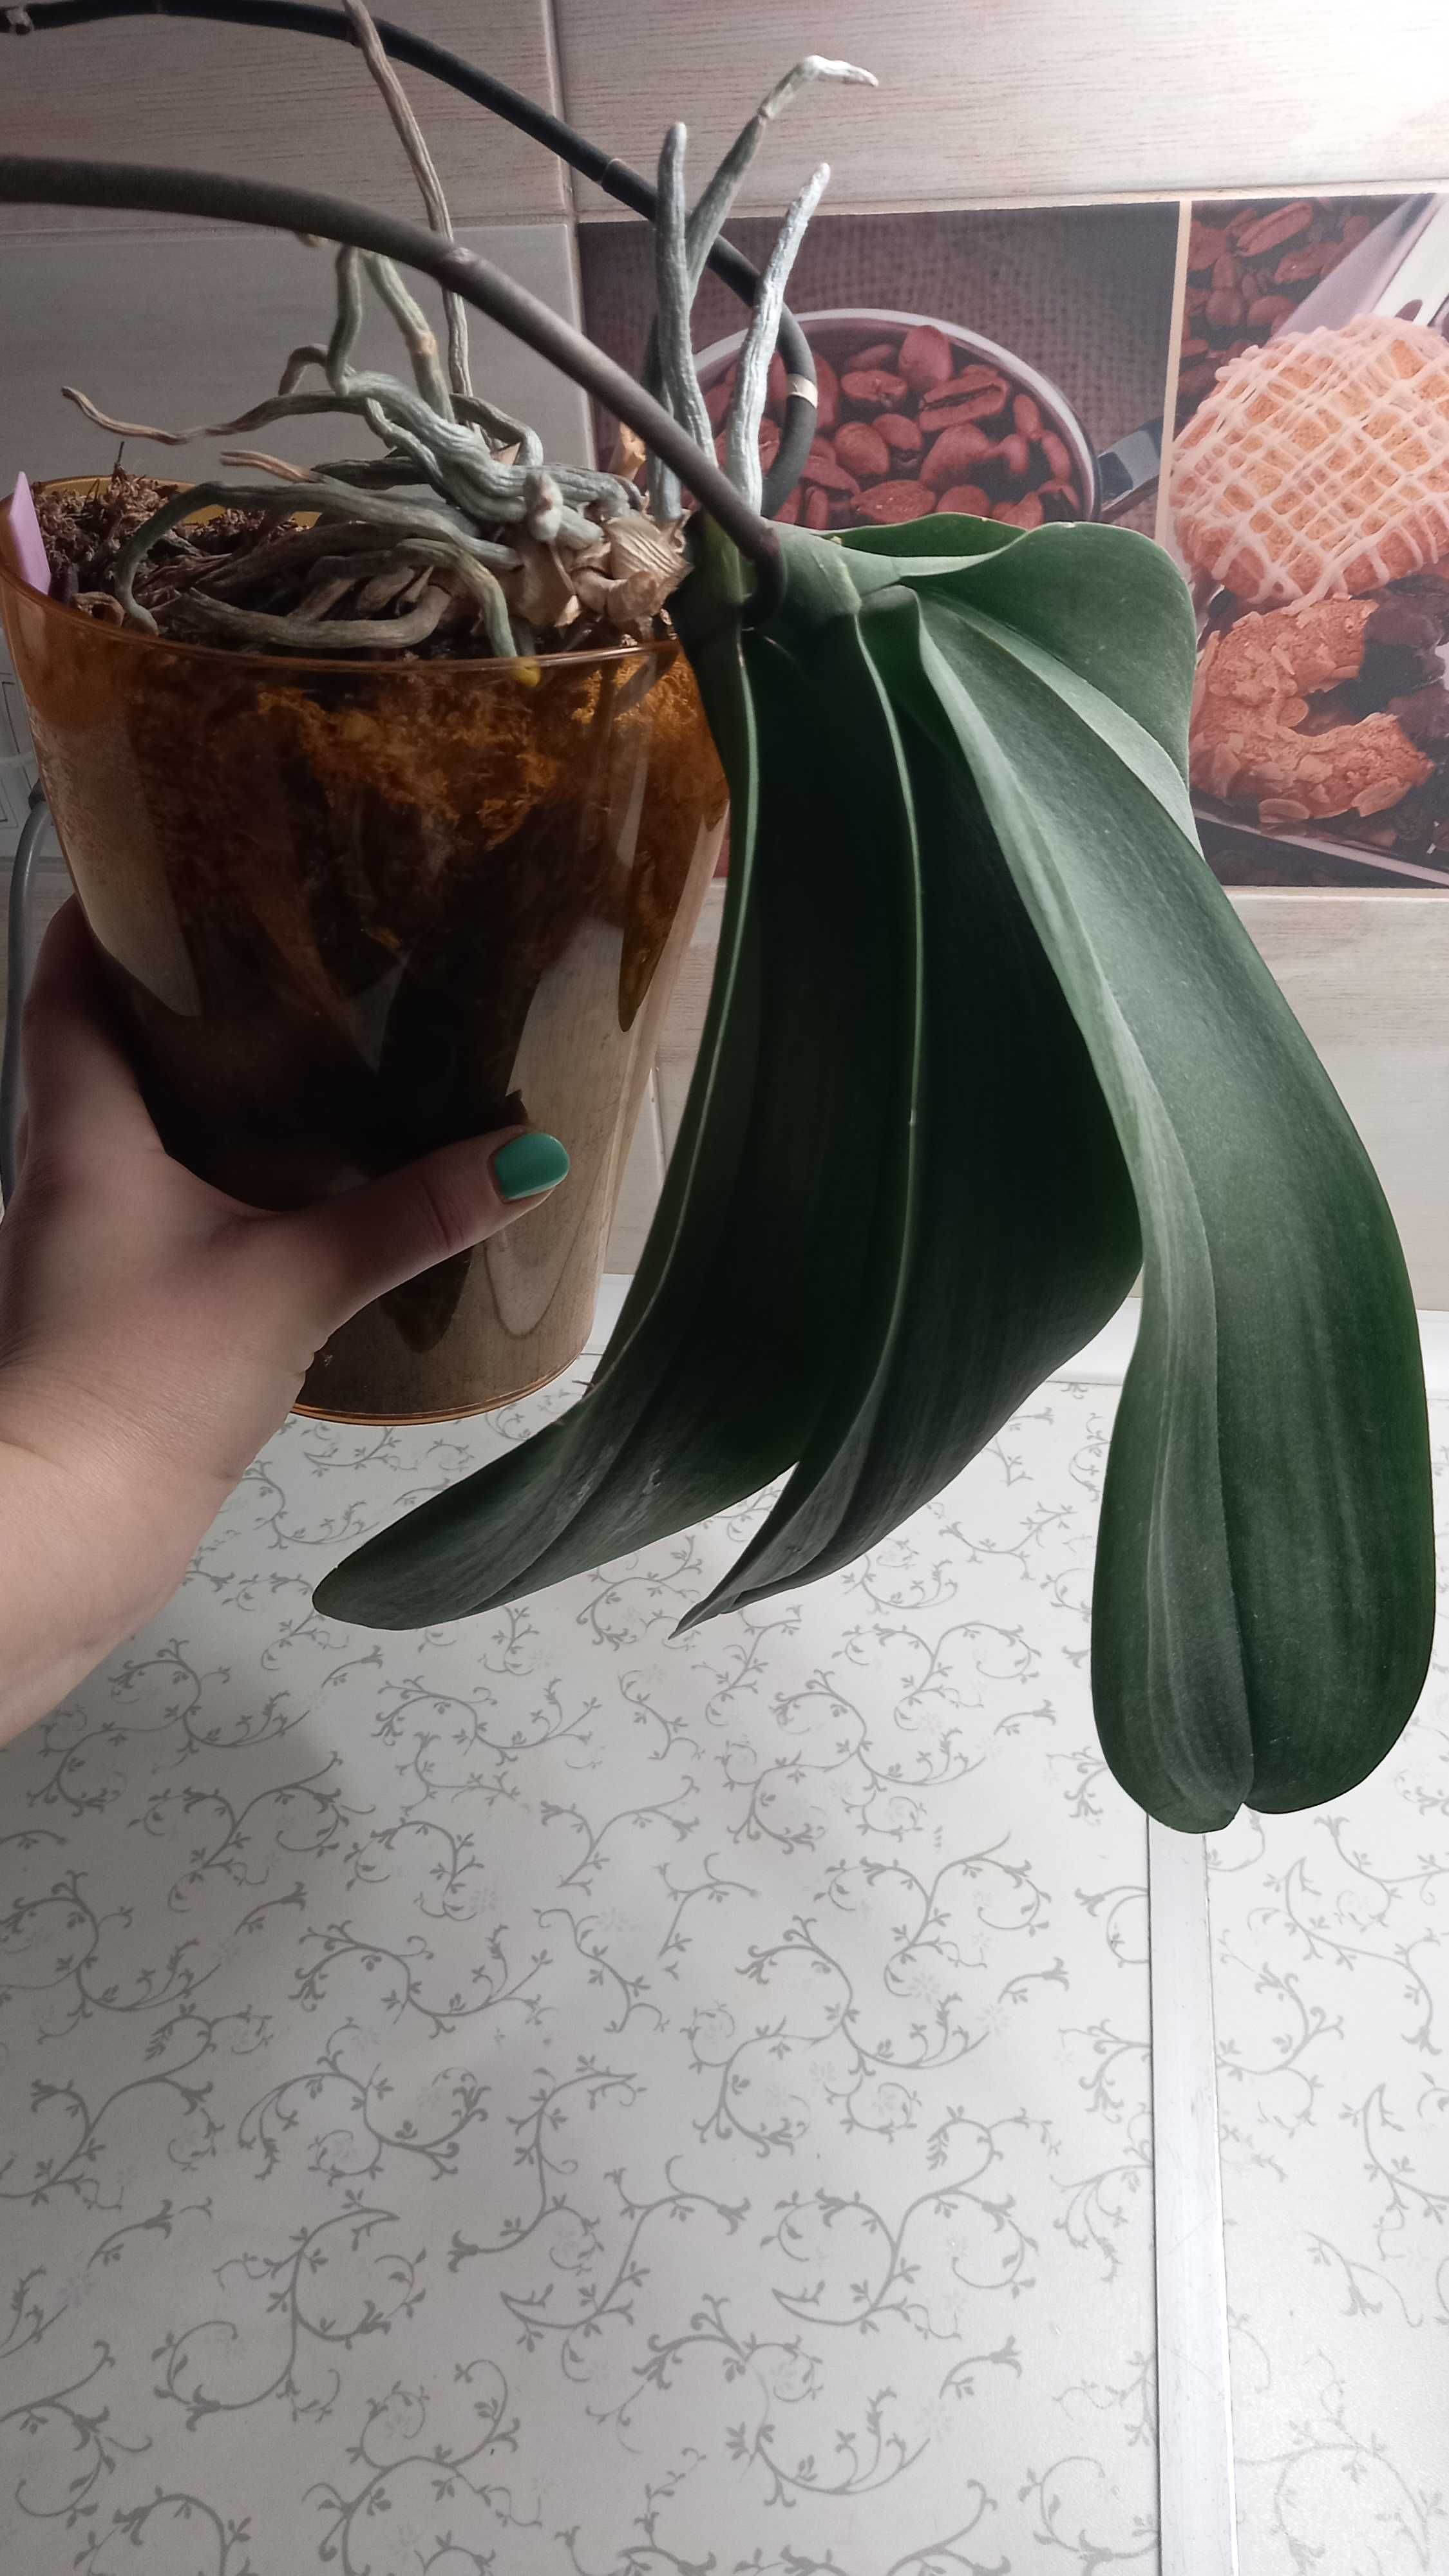 СОРТ  Моушен орхідея фаленопсис сортовая